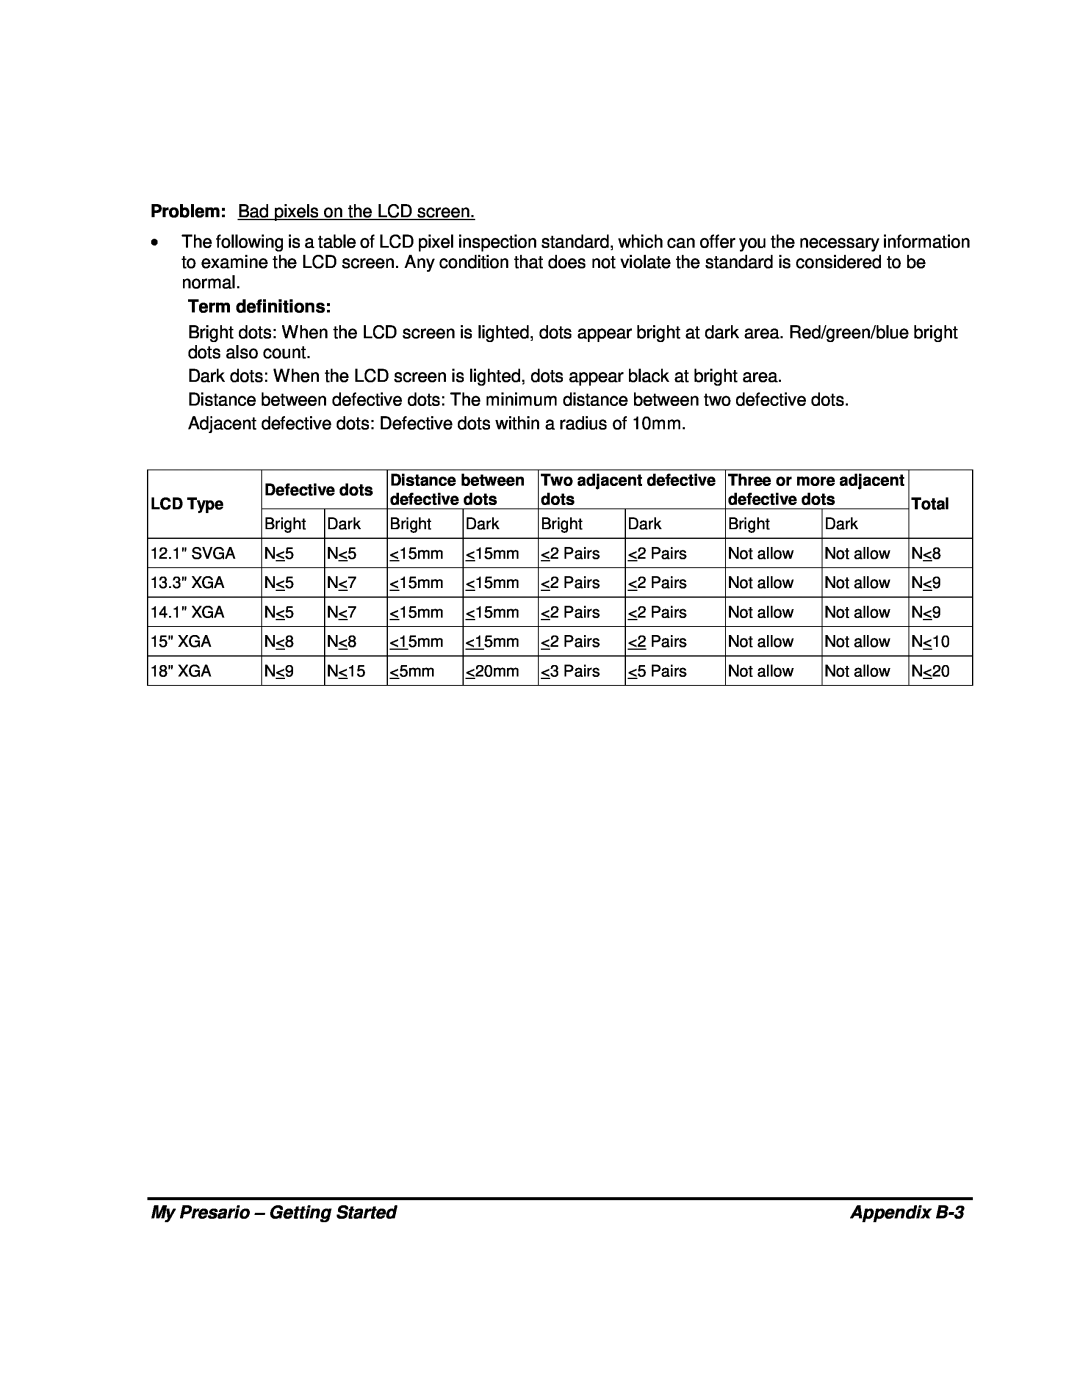 HP 80XL302 manual Term definitions, My Presario - Getting Started, Appendix B-3 